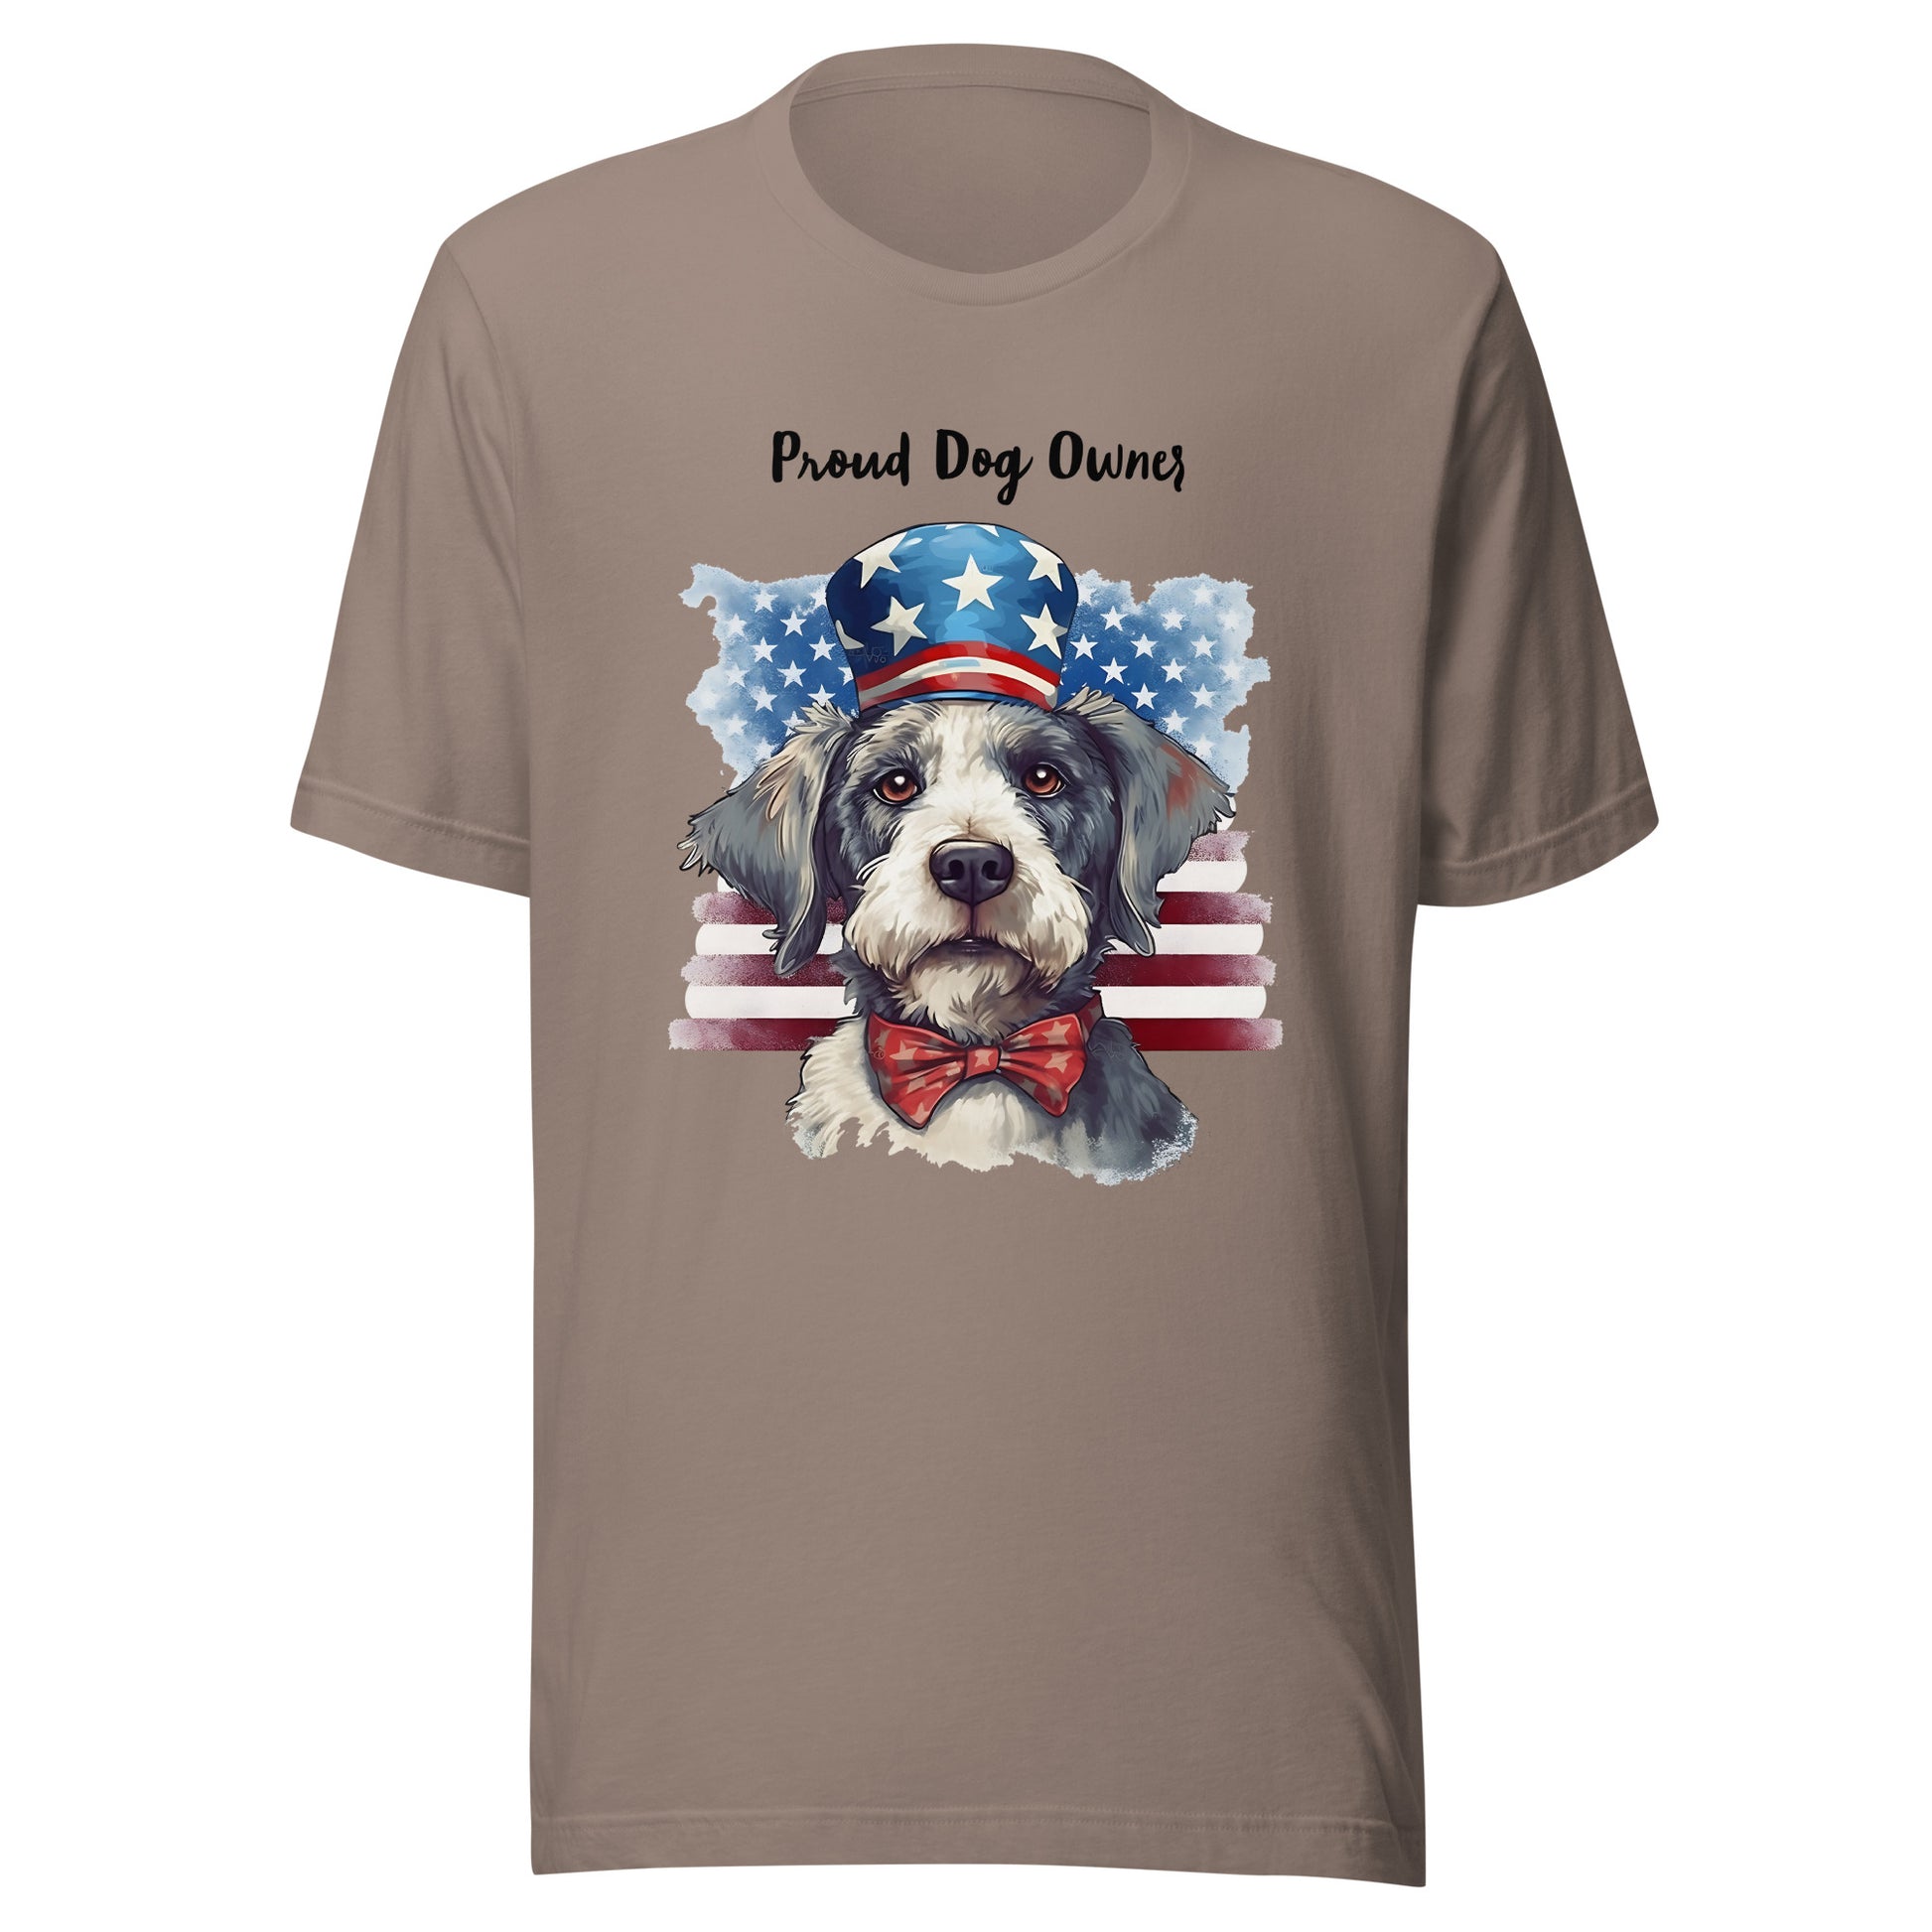 Patriotic Dog Tibetan Terrier Pebble Color T-Shirt For Proud Dog Owner